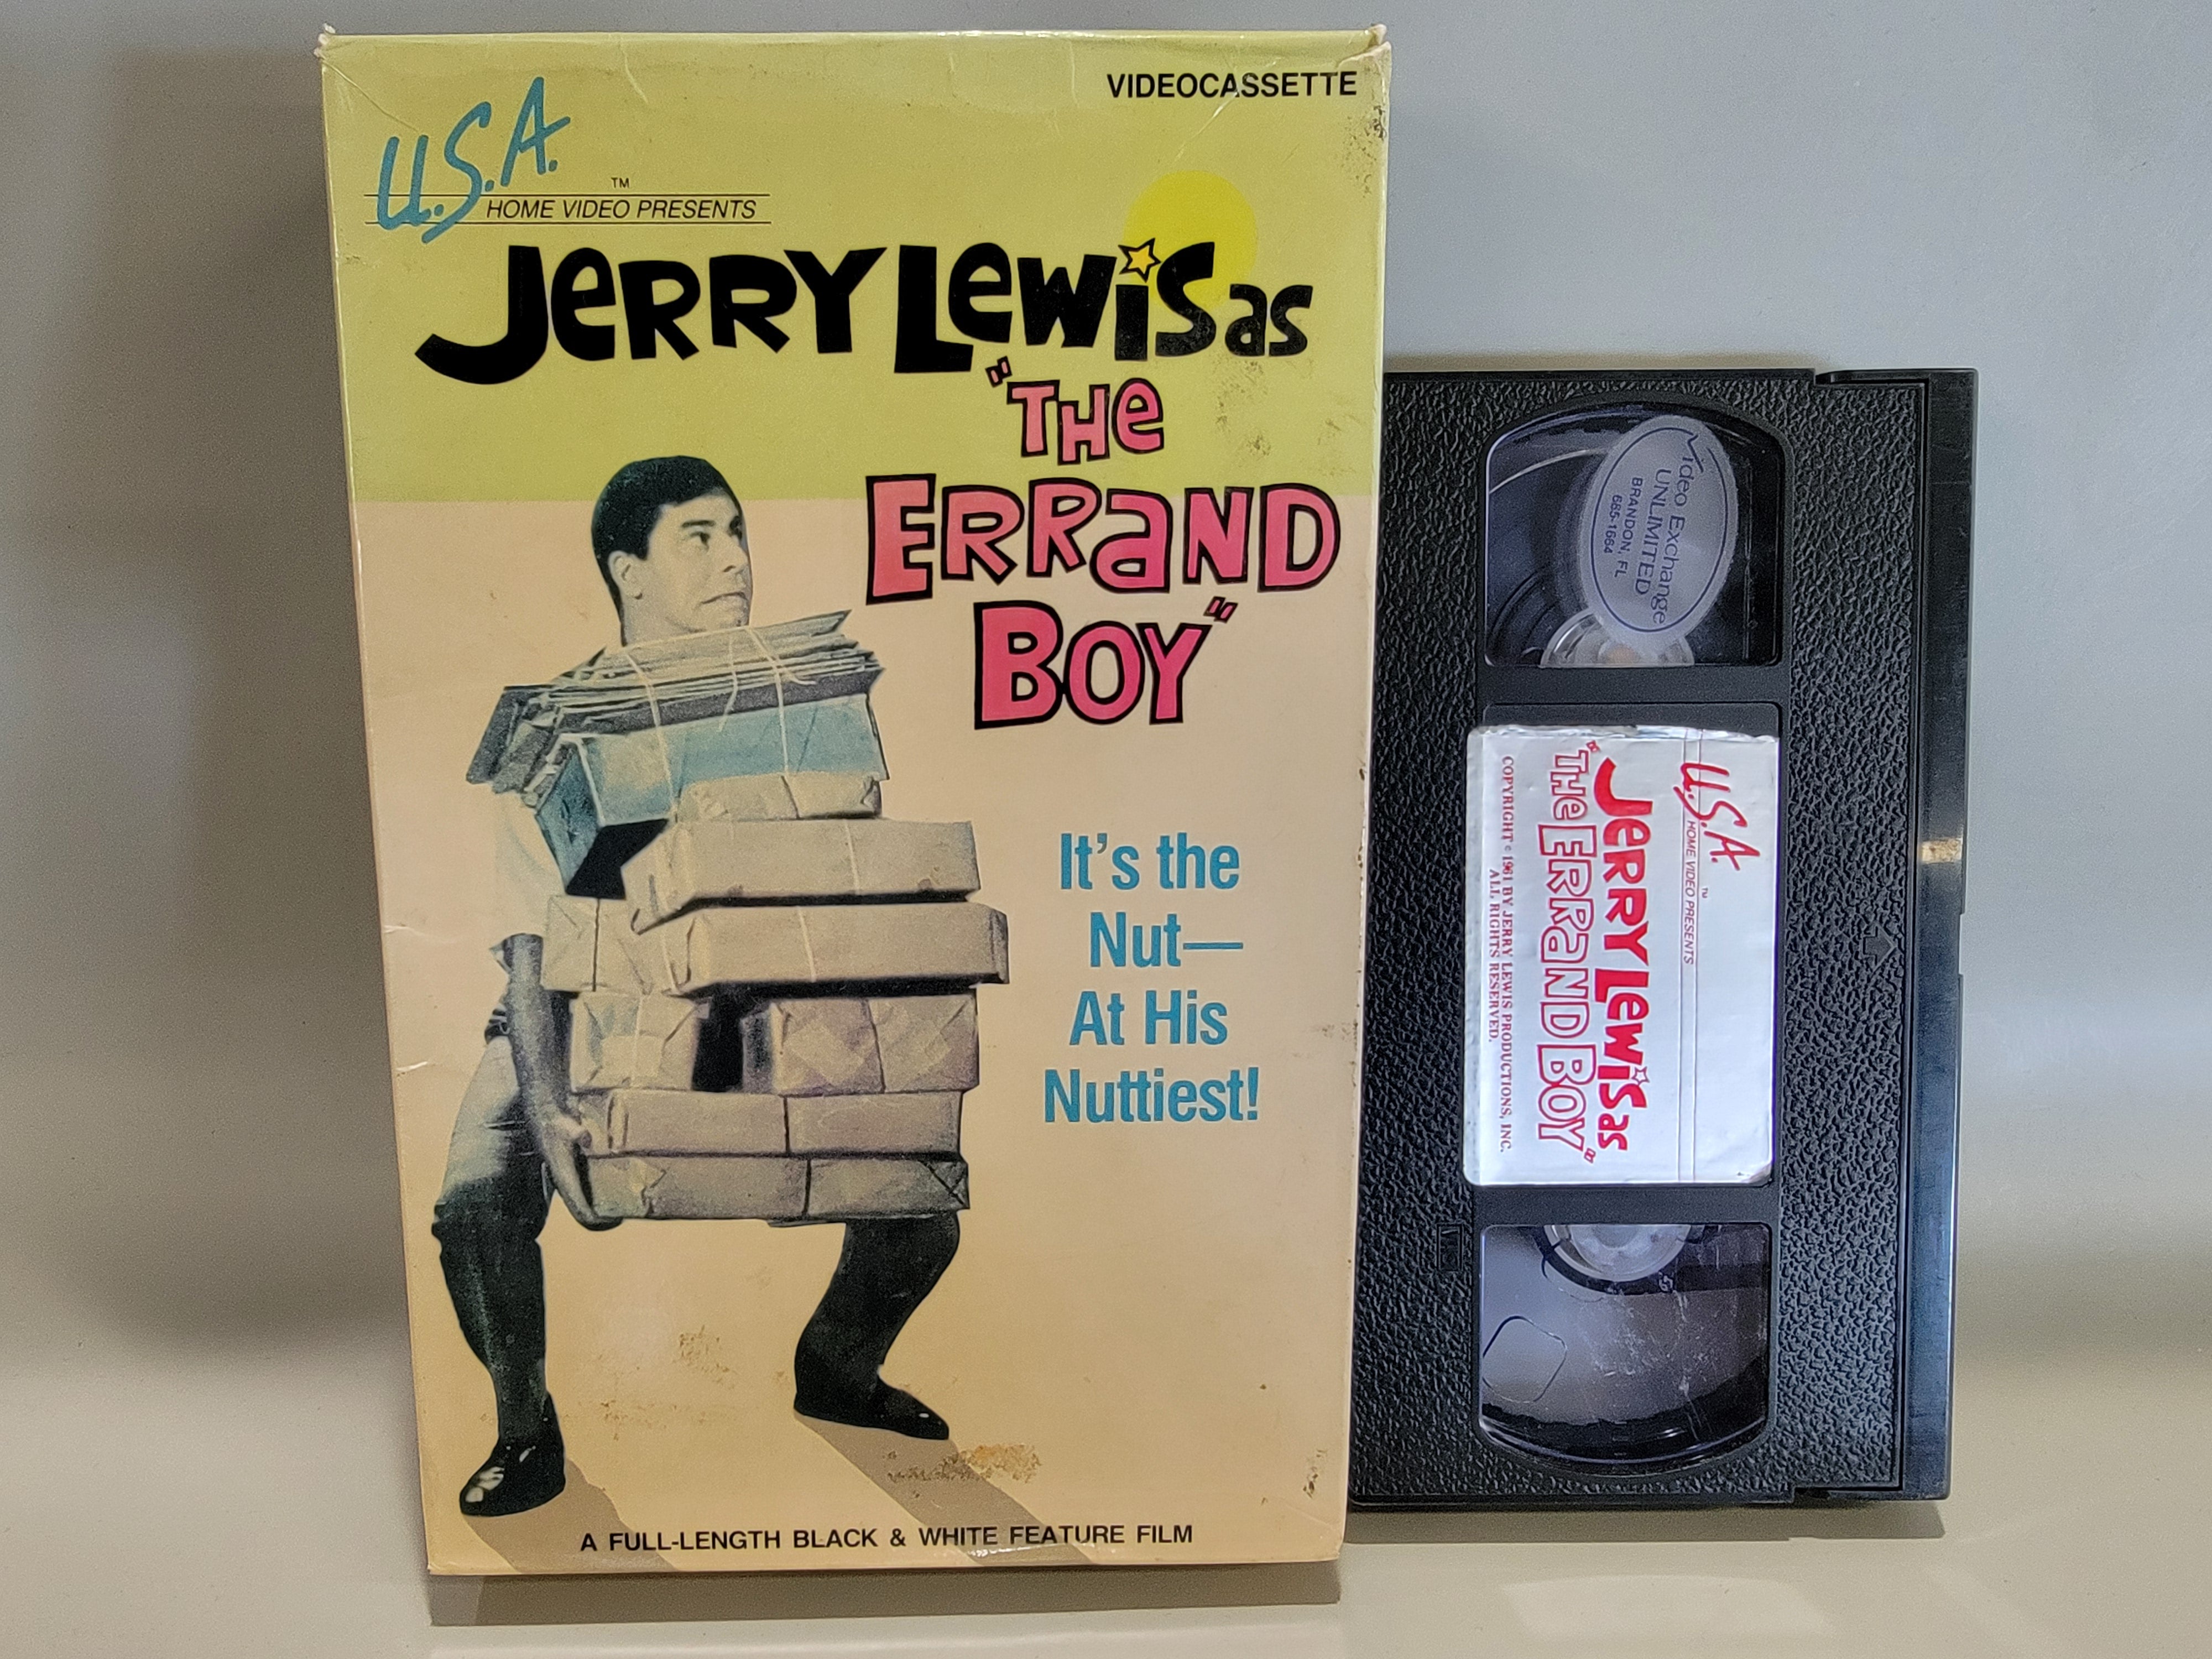 THE ERRAND BOY VHS [USED]